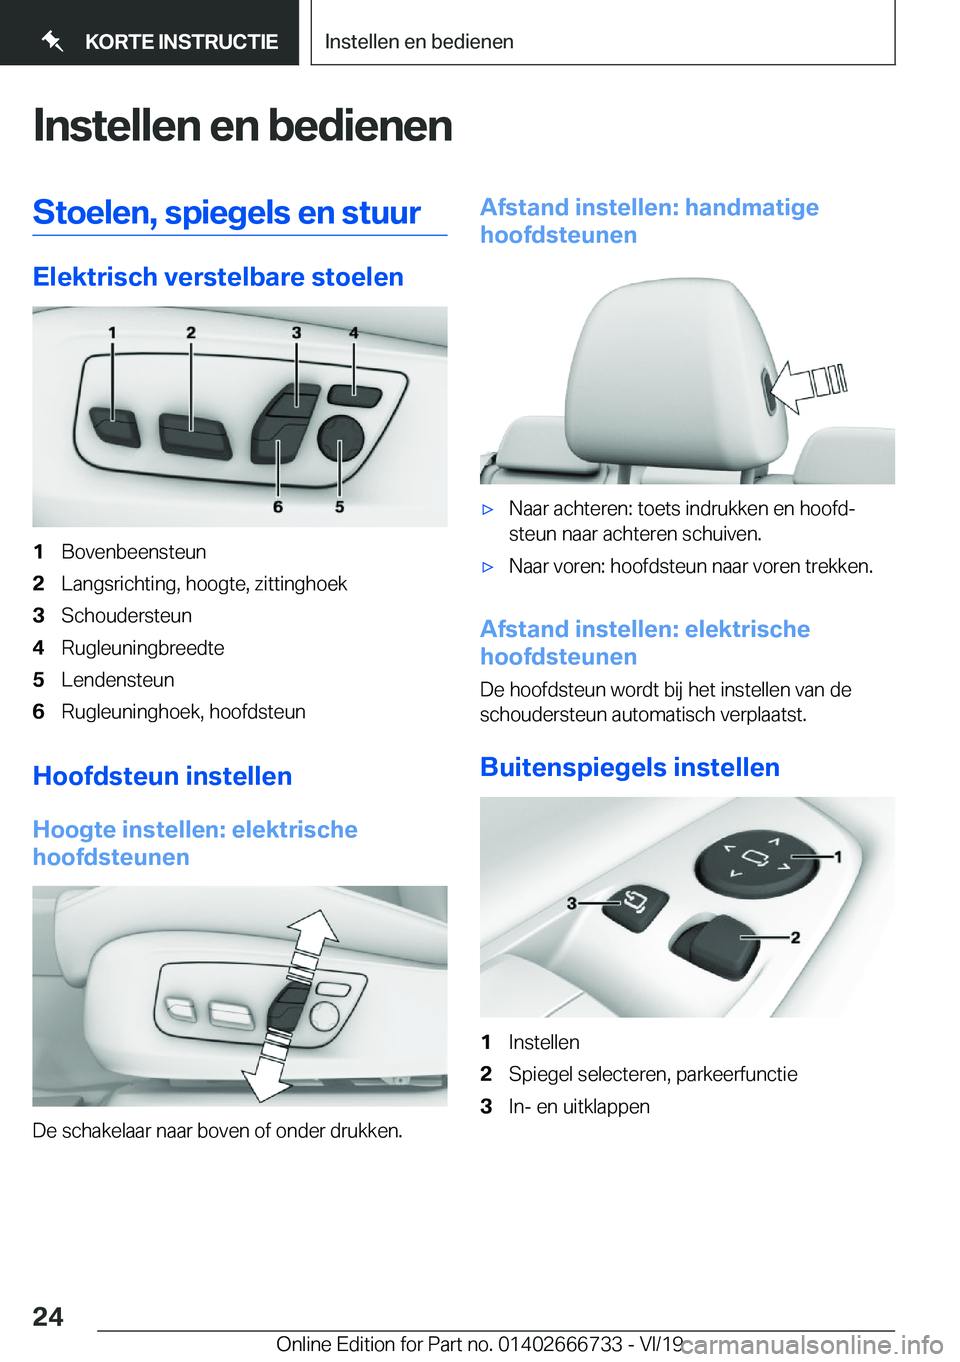 BMW M5 2020  Instructieboekjes (in Dutch) �I�n�s�t�e�l�l�e�n��e�n��b�e�d�i�e�n�e�n�S�t�o�e�l�e�n�,��s�p�i�e�g�e�l�s��e�n��s�t�u�u�r
�E�l�e�k�t�r�i�s�c�h��v�e�r�s�t�e�l�b�a�r�e��s�t�o�e�l�e�n
�1�B�o�v�e�n�b�e�e�n�s�t�e�u�n�2�L�a�n�g�s�r